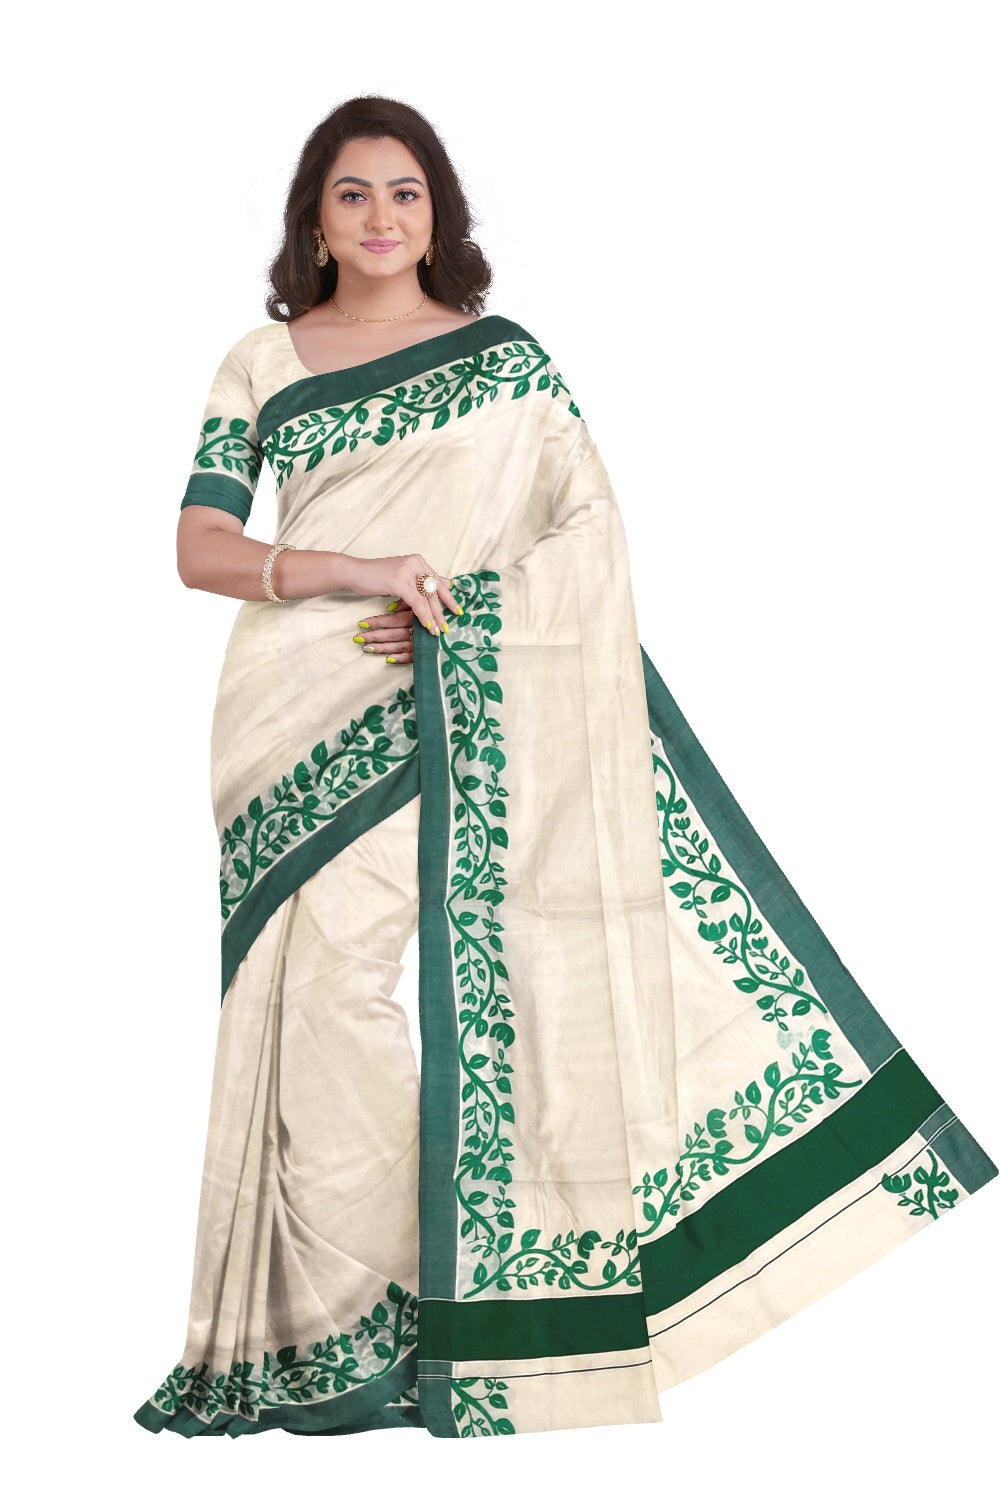 Southloom Original Design Kerala Saree with Green Floral Vines Block Print